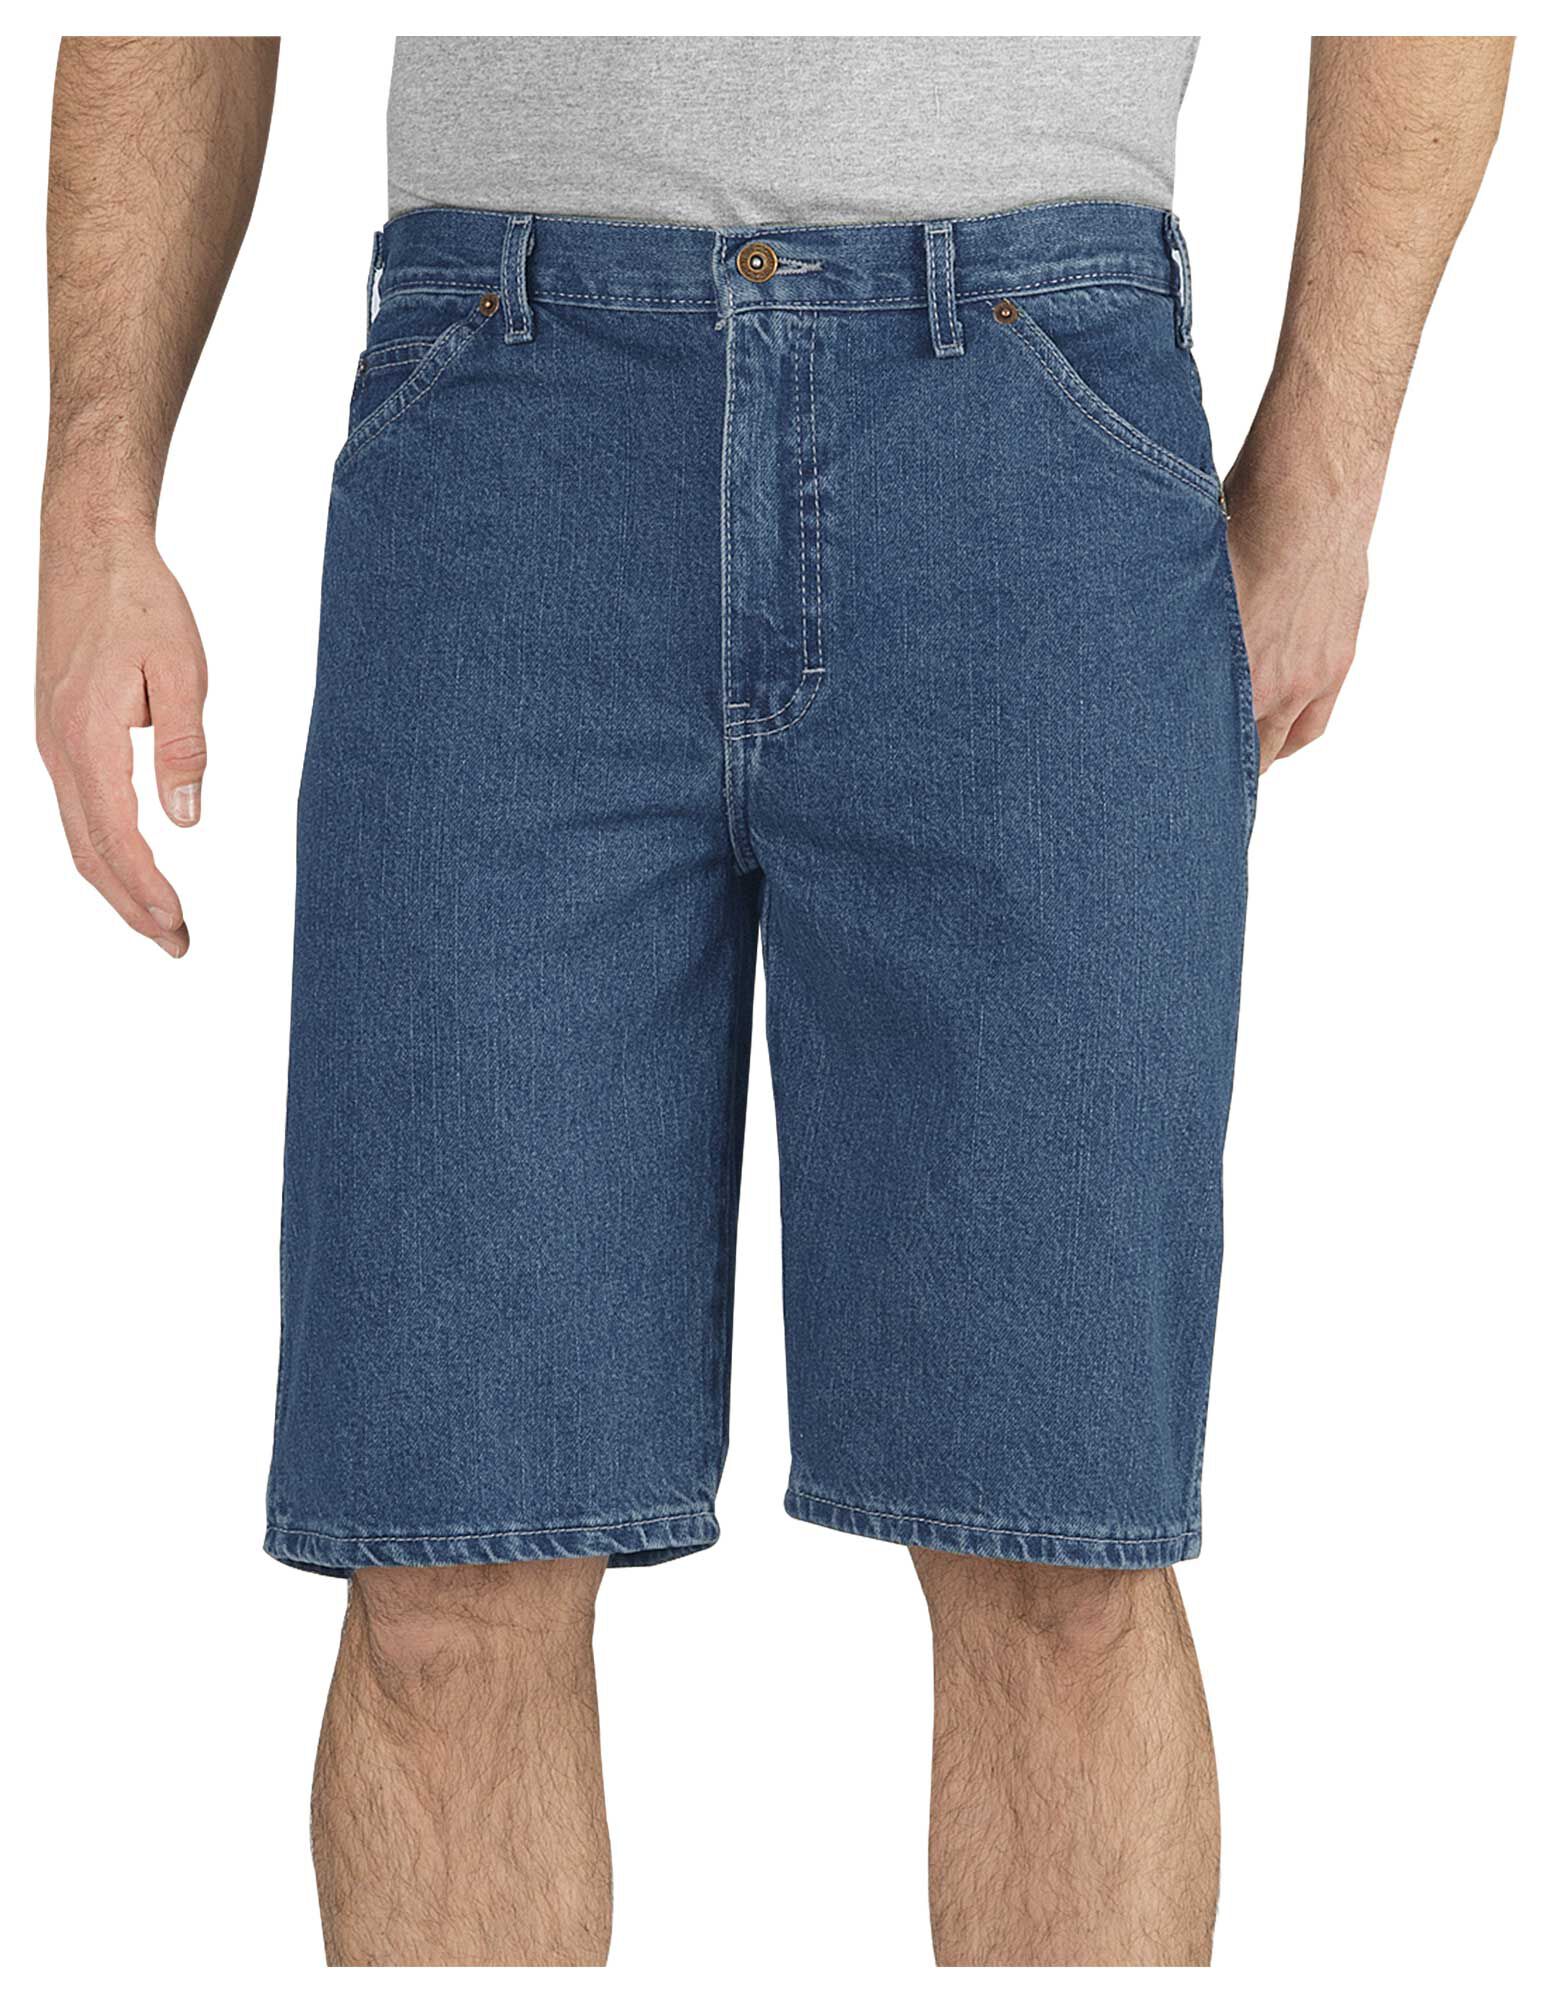 dickies jean shorts mens